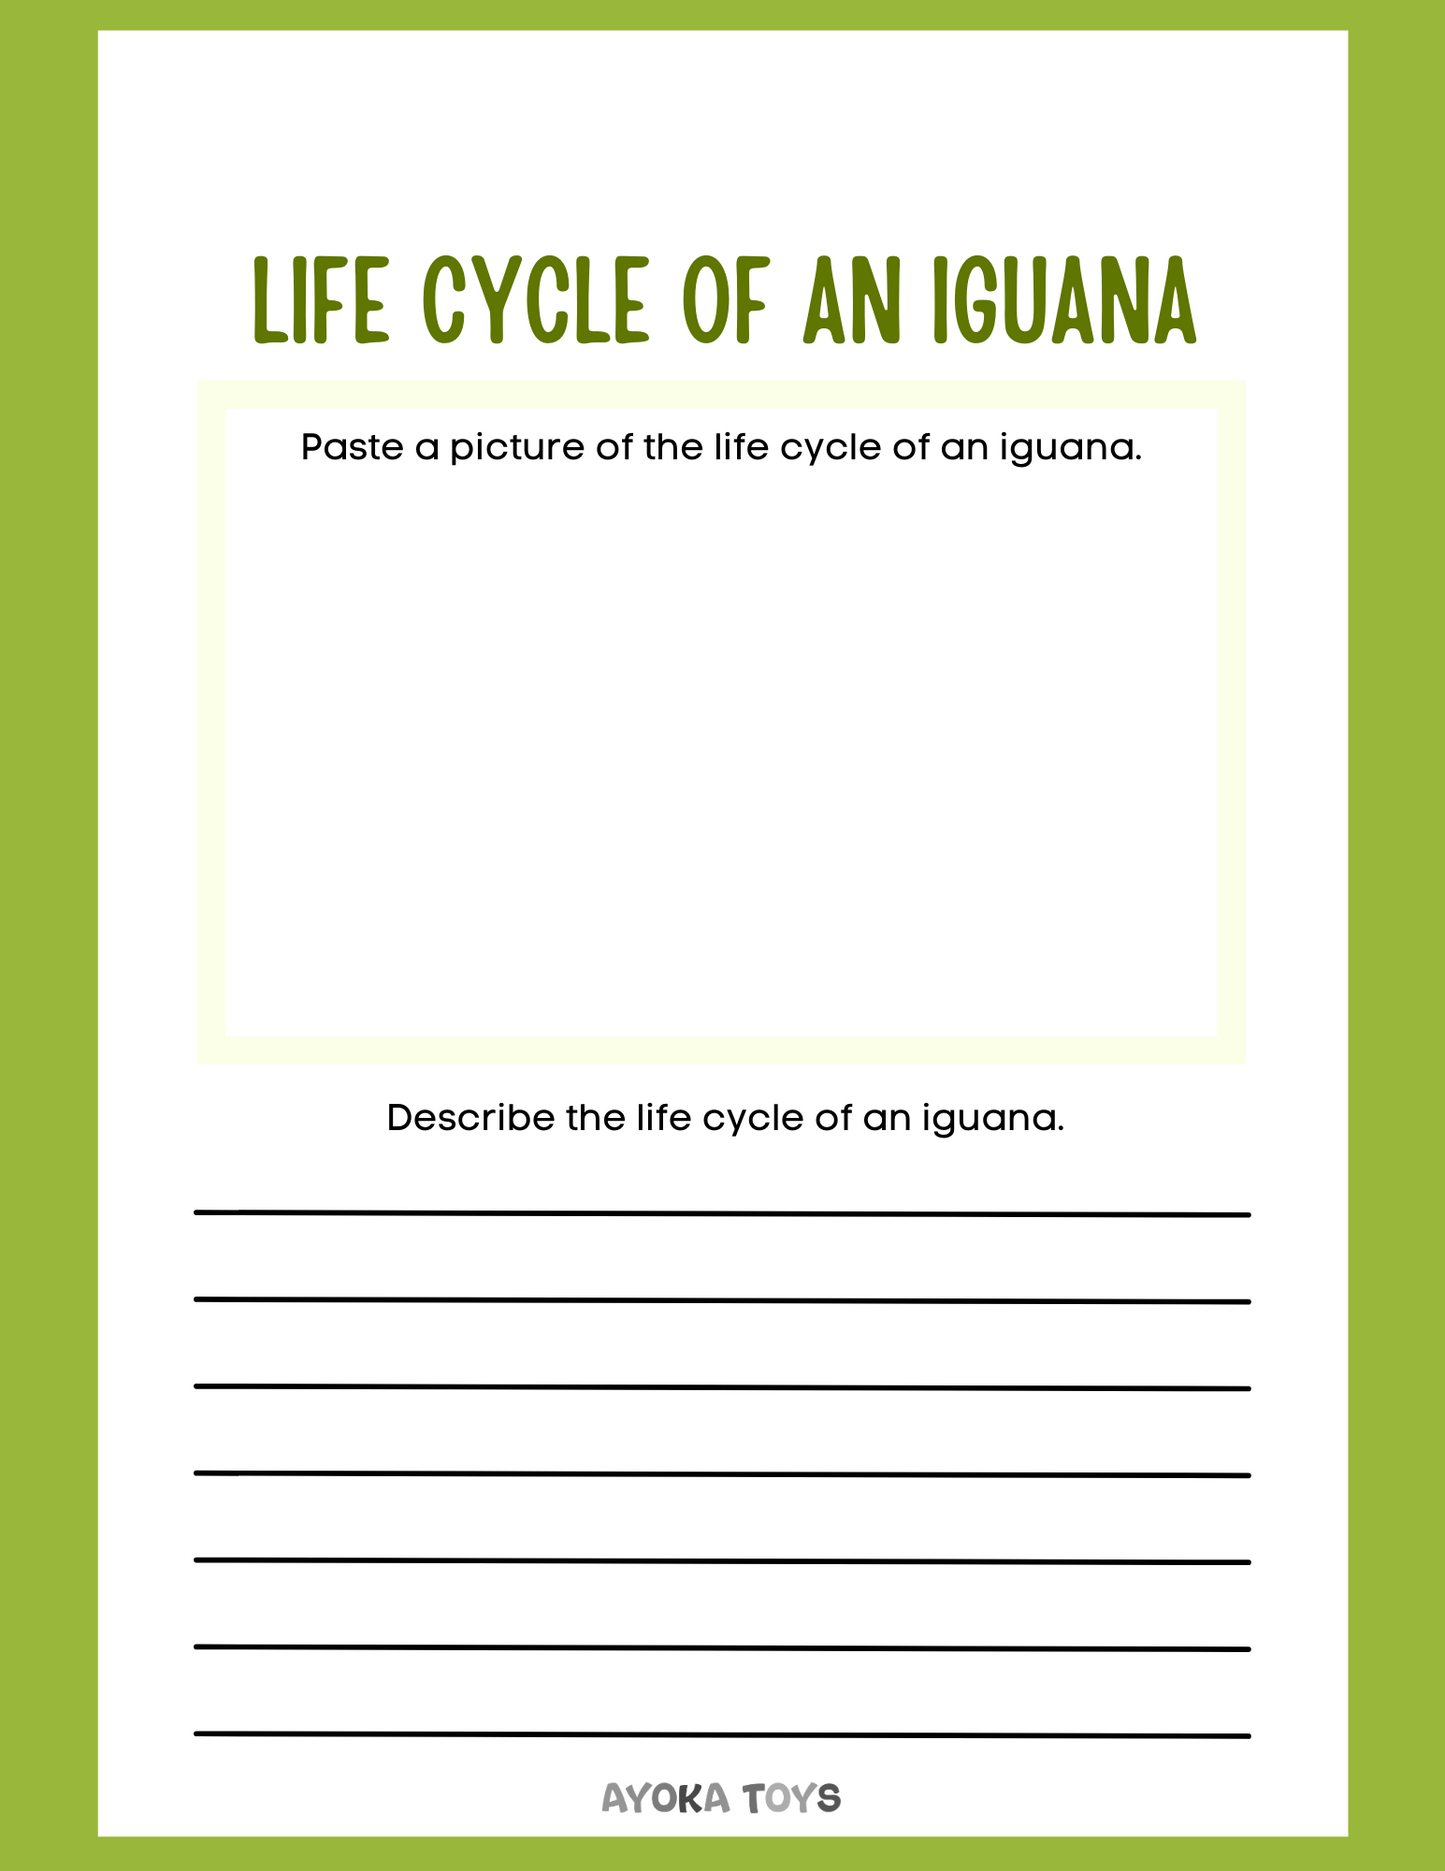 Animal Research - Iguanas